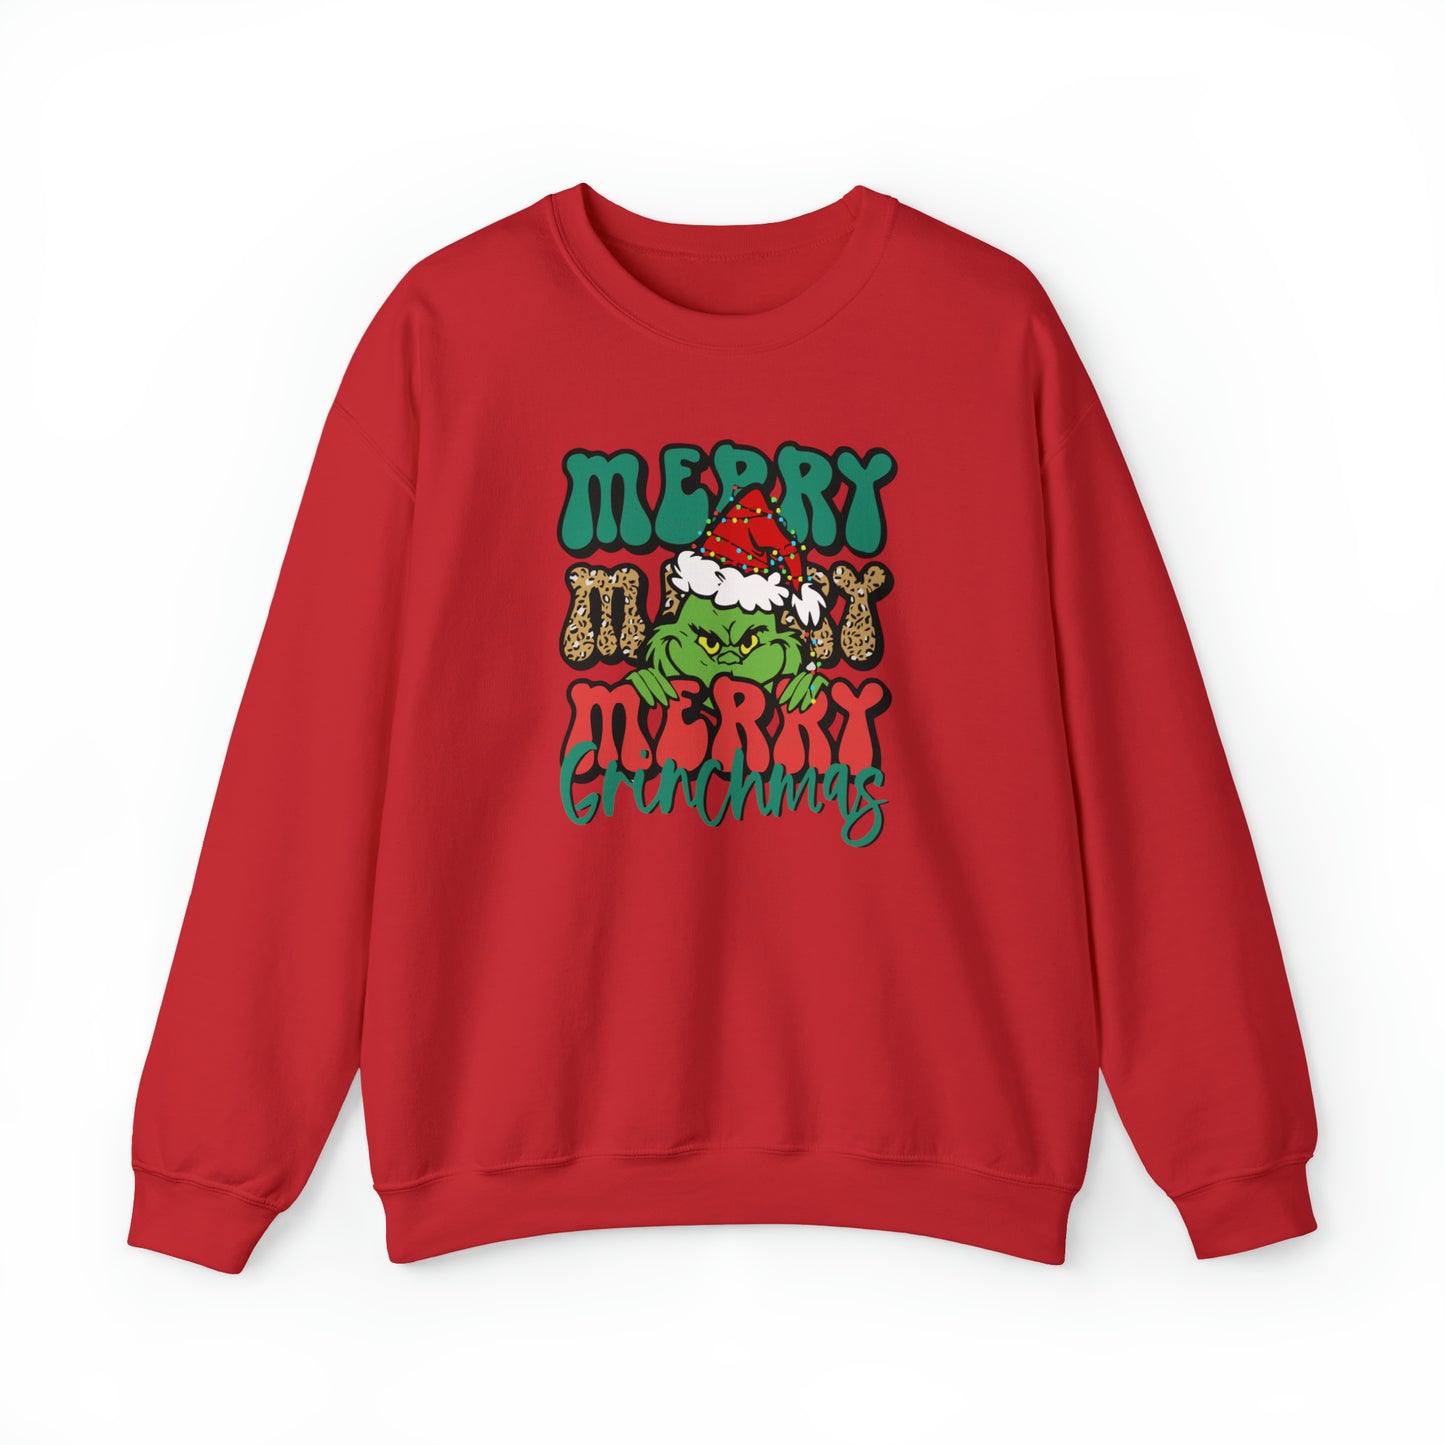 Merry Grinchmas Crewneck Sweatshirt